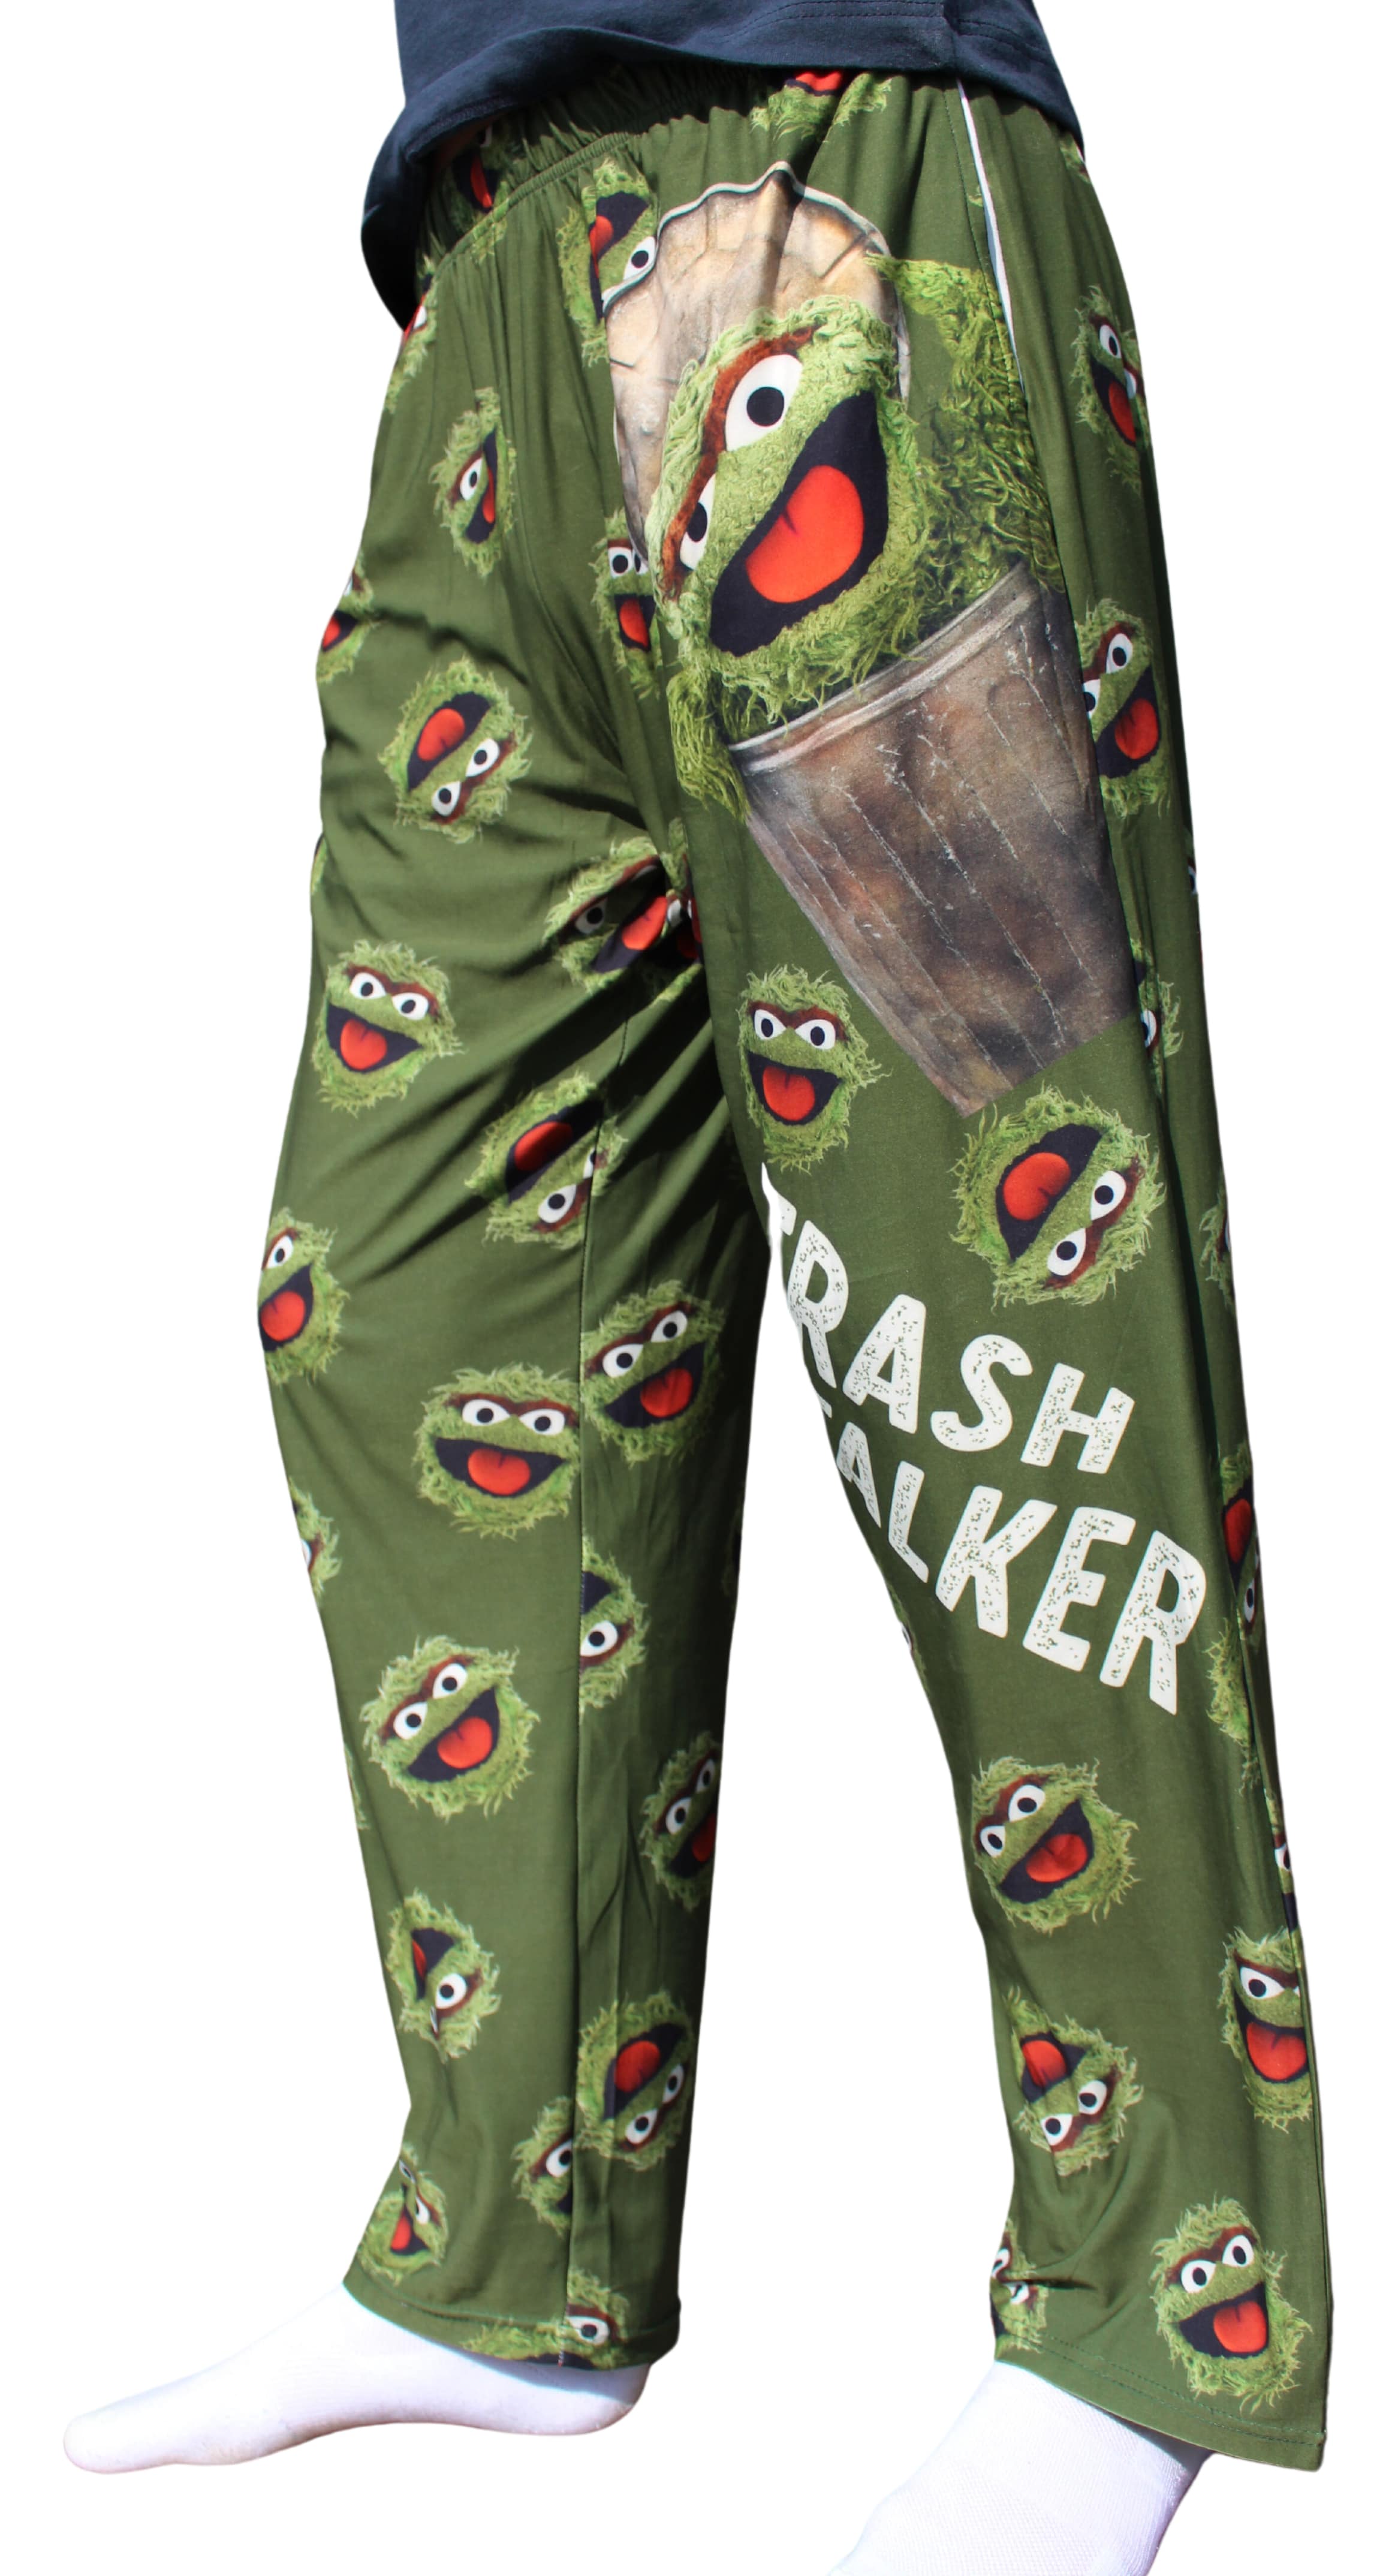 Trash Talker Pajama Lounge Pants on model left side view (waist down)